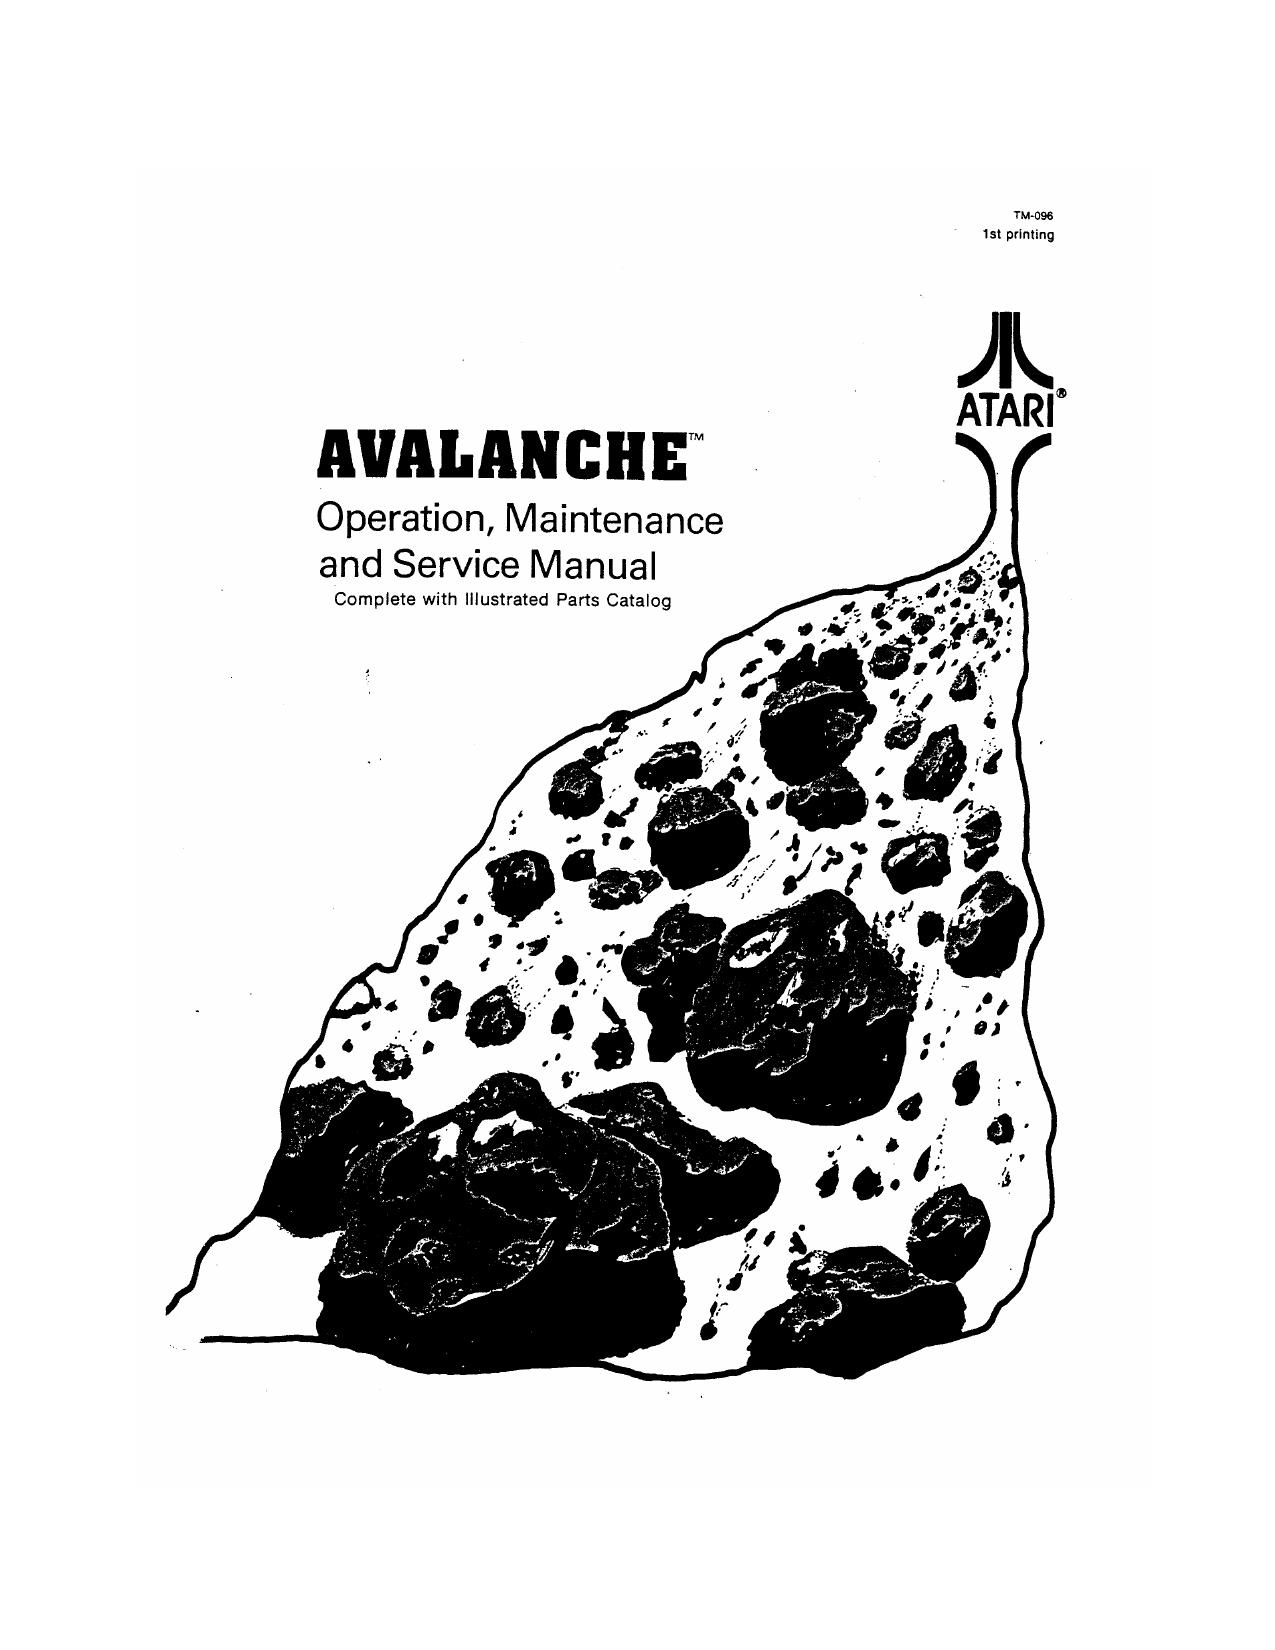 Avalanche TM-096 1st Printing